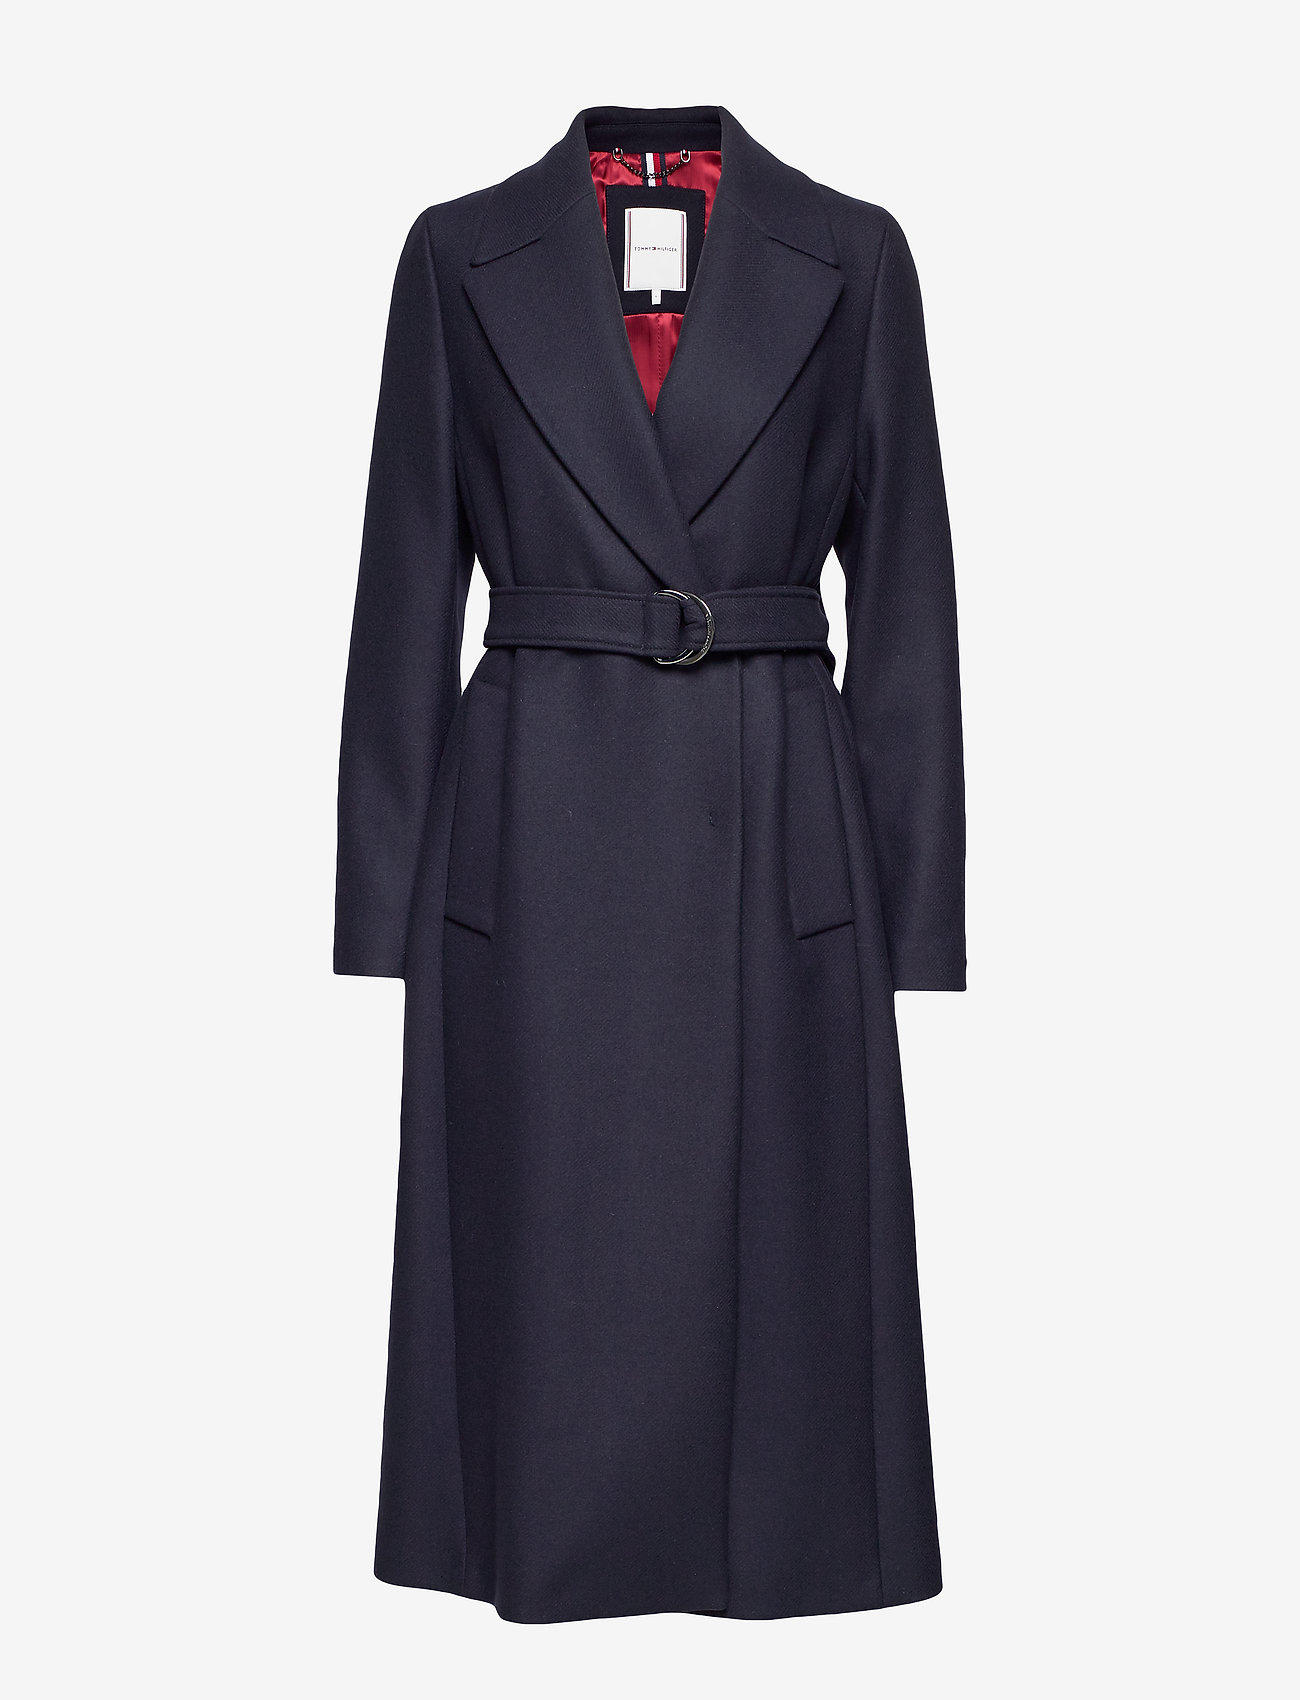 Tommy Hilfiger Womens Standard Wool Blend Classic Hooded Toggle Coat